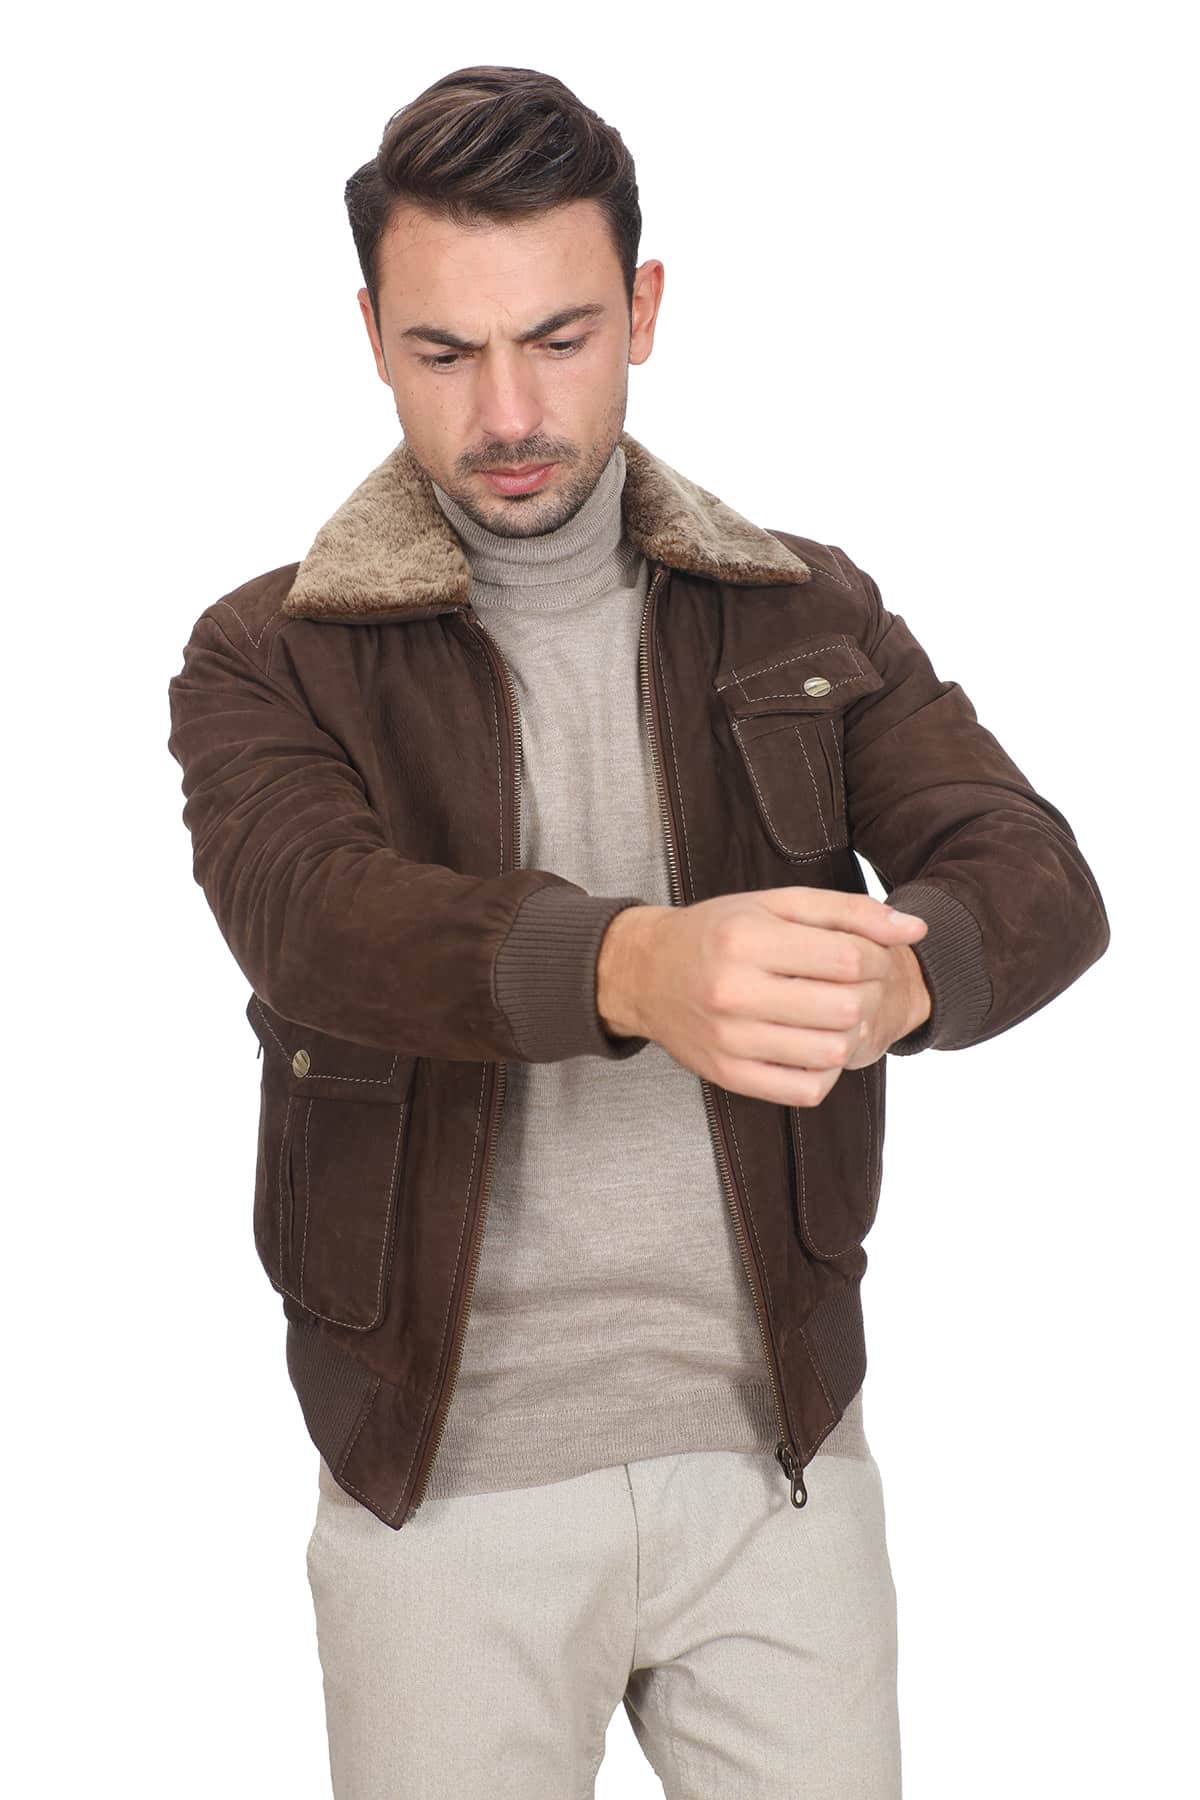 Buy Leather Jacket Online